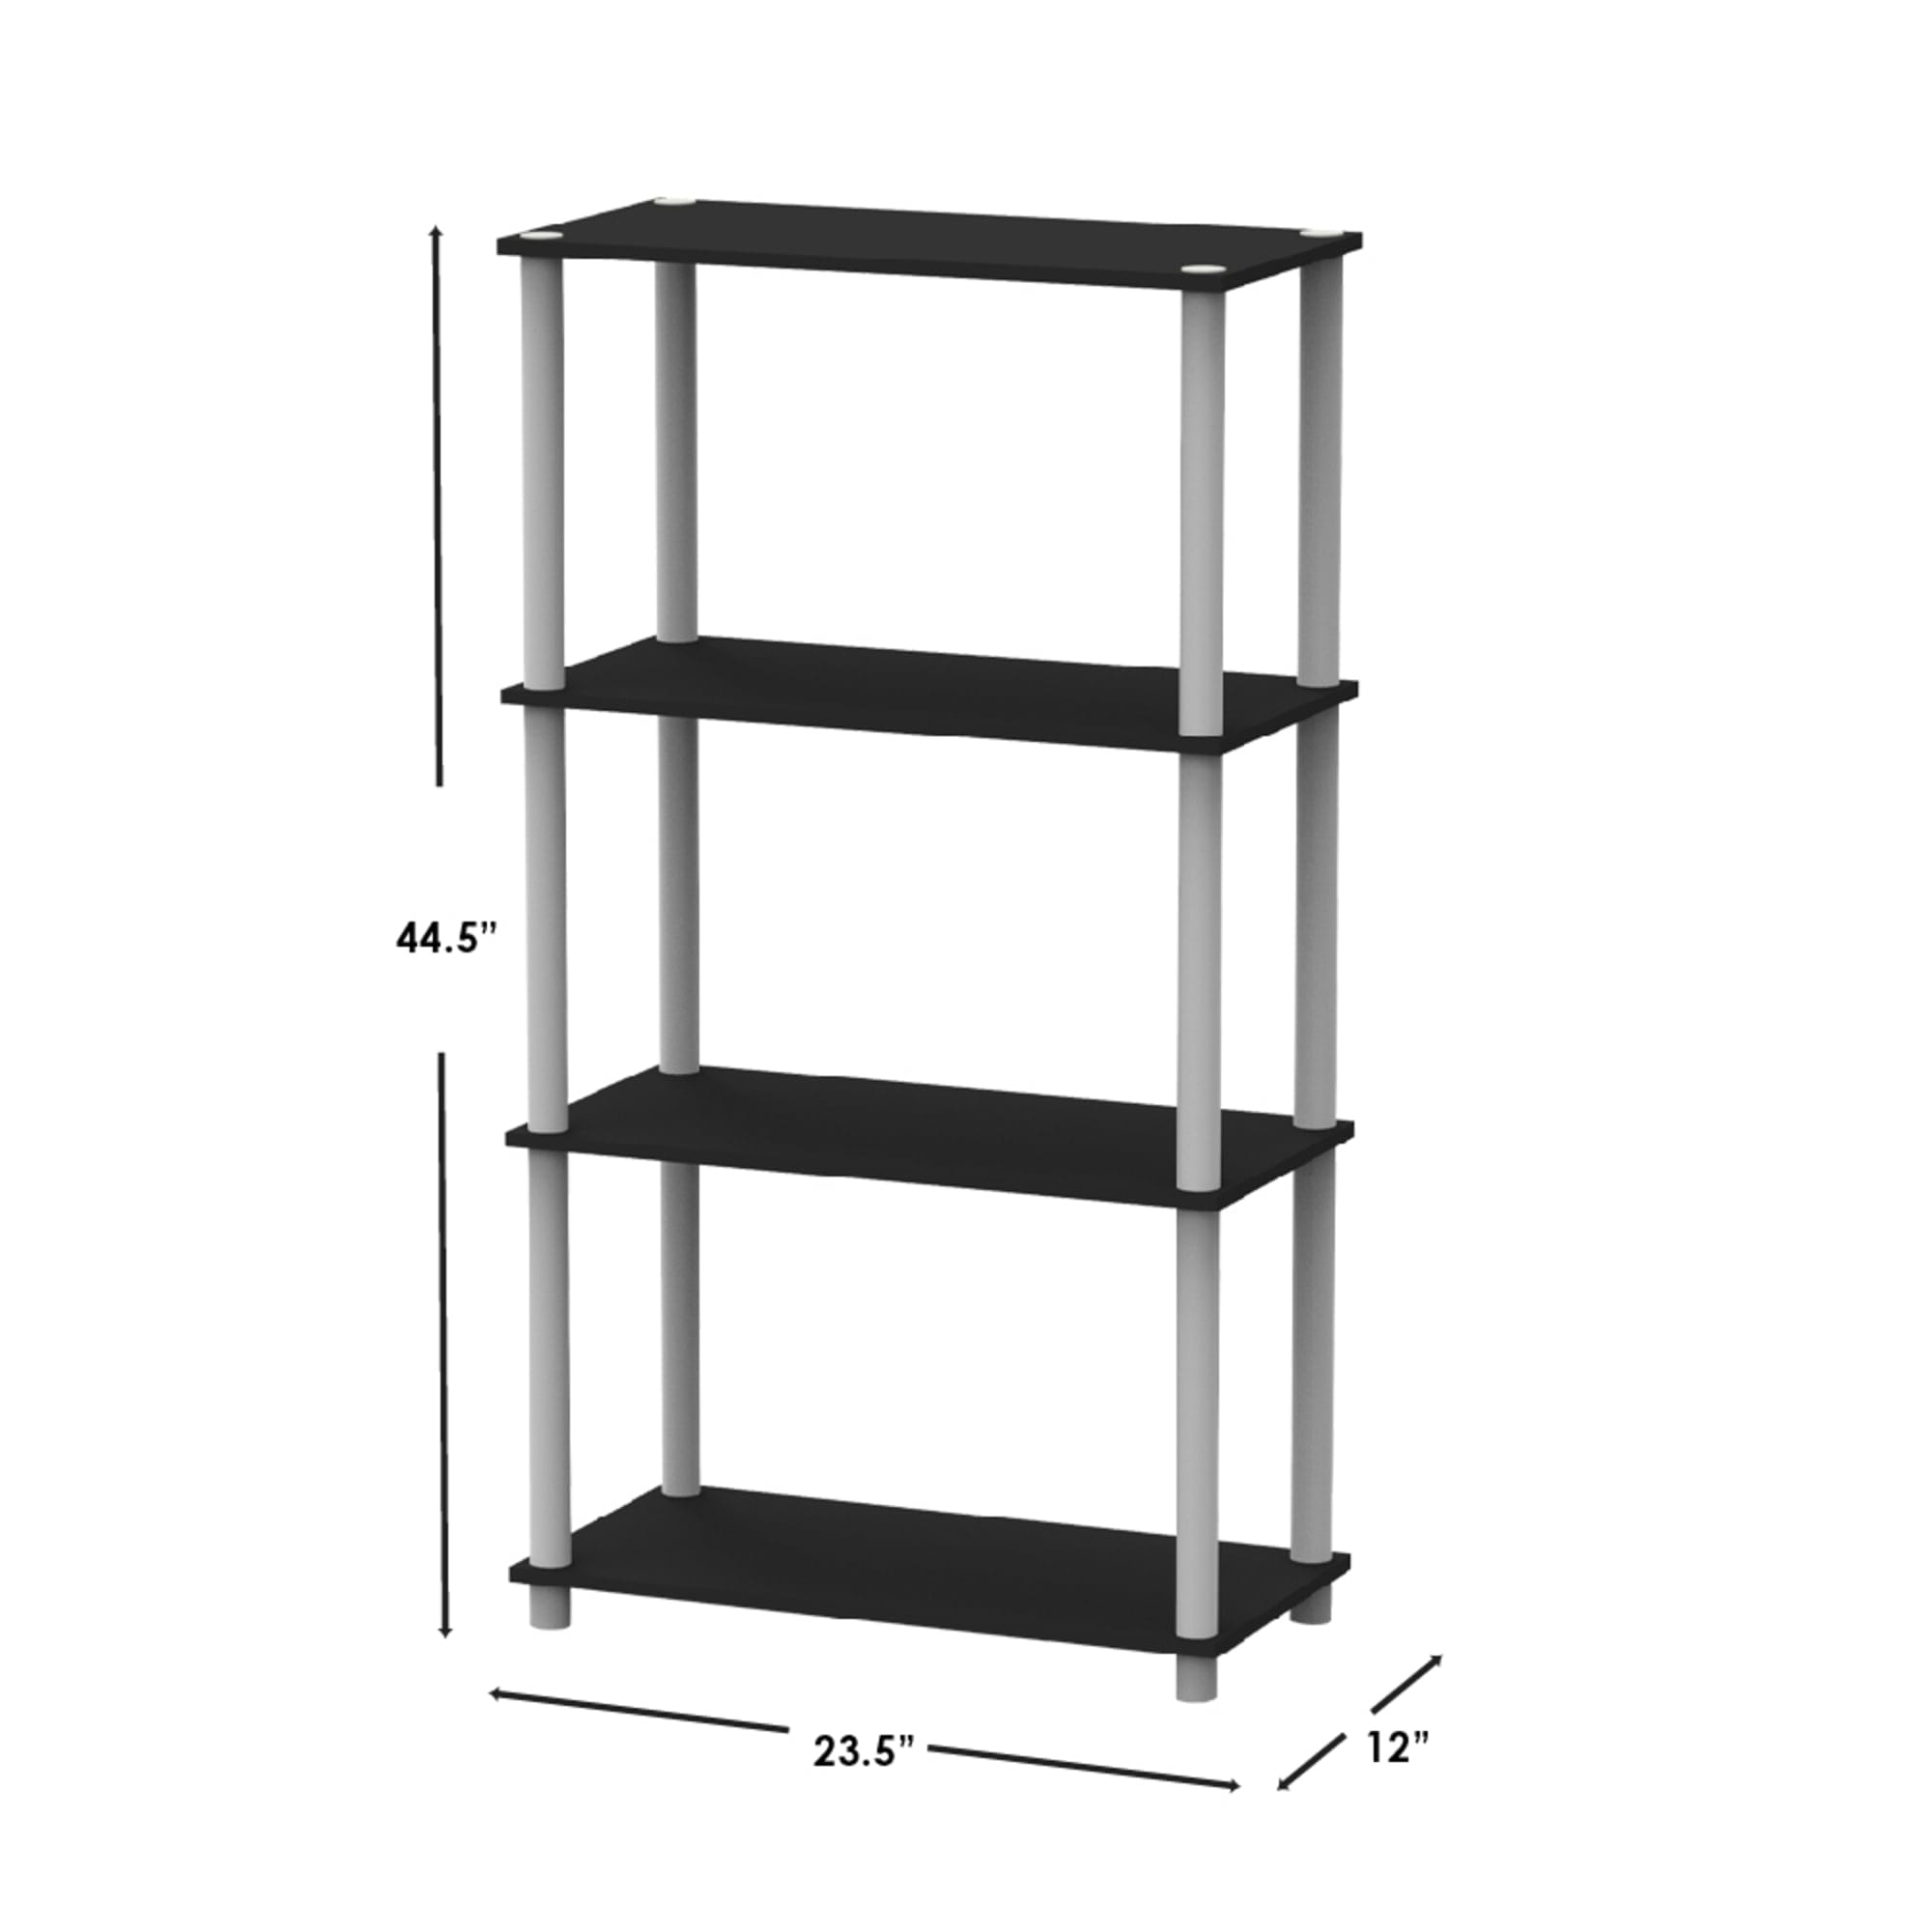 Home Basics 4 Tier Storage Shelf, Black $40.00 EACH, CASE PACK OF 1